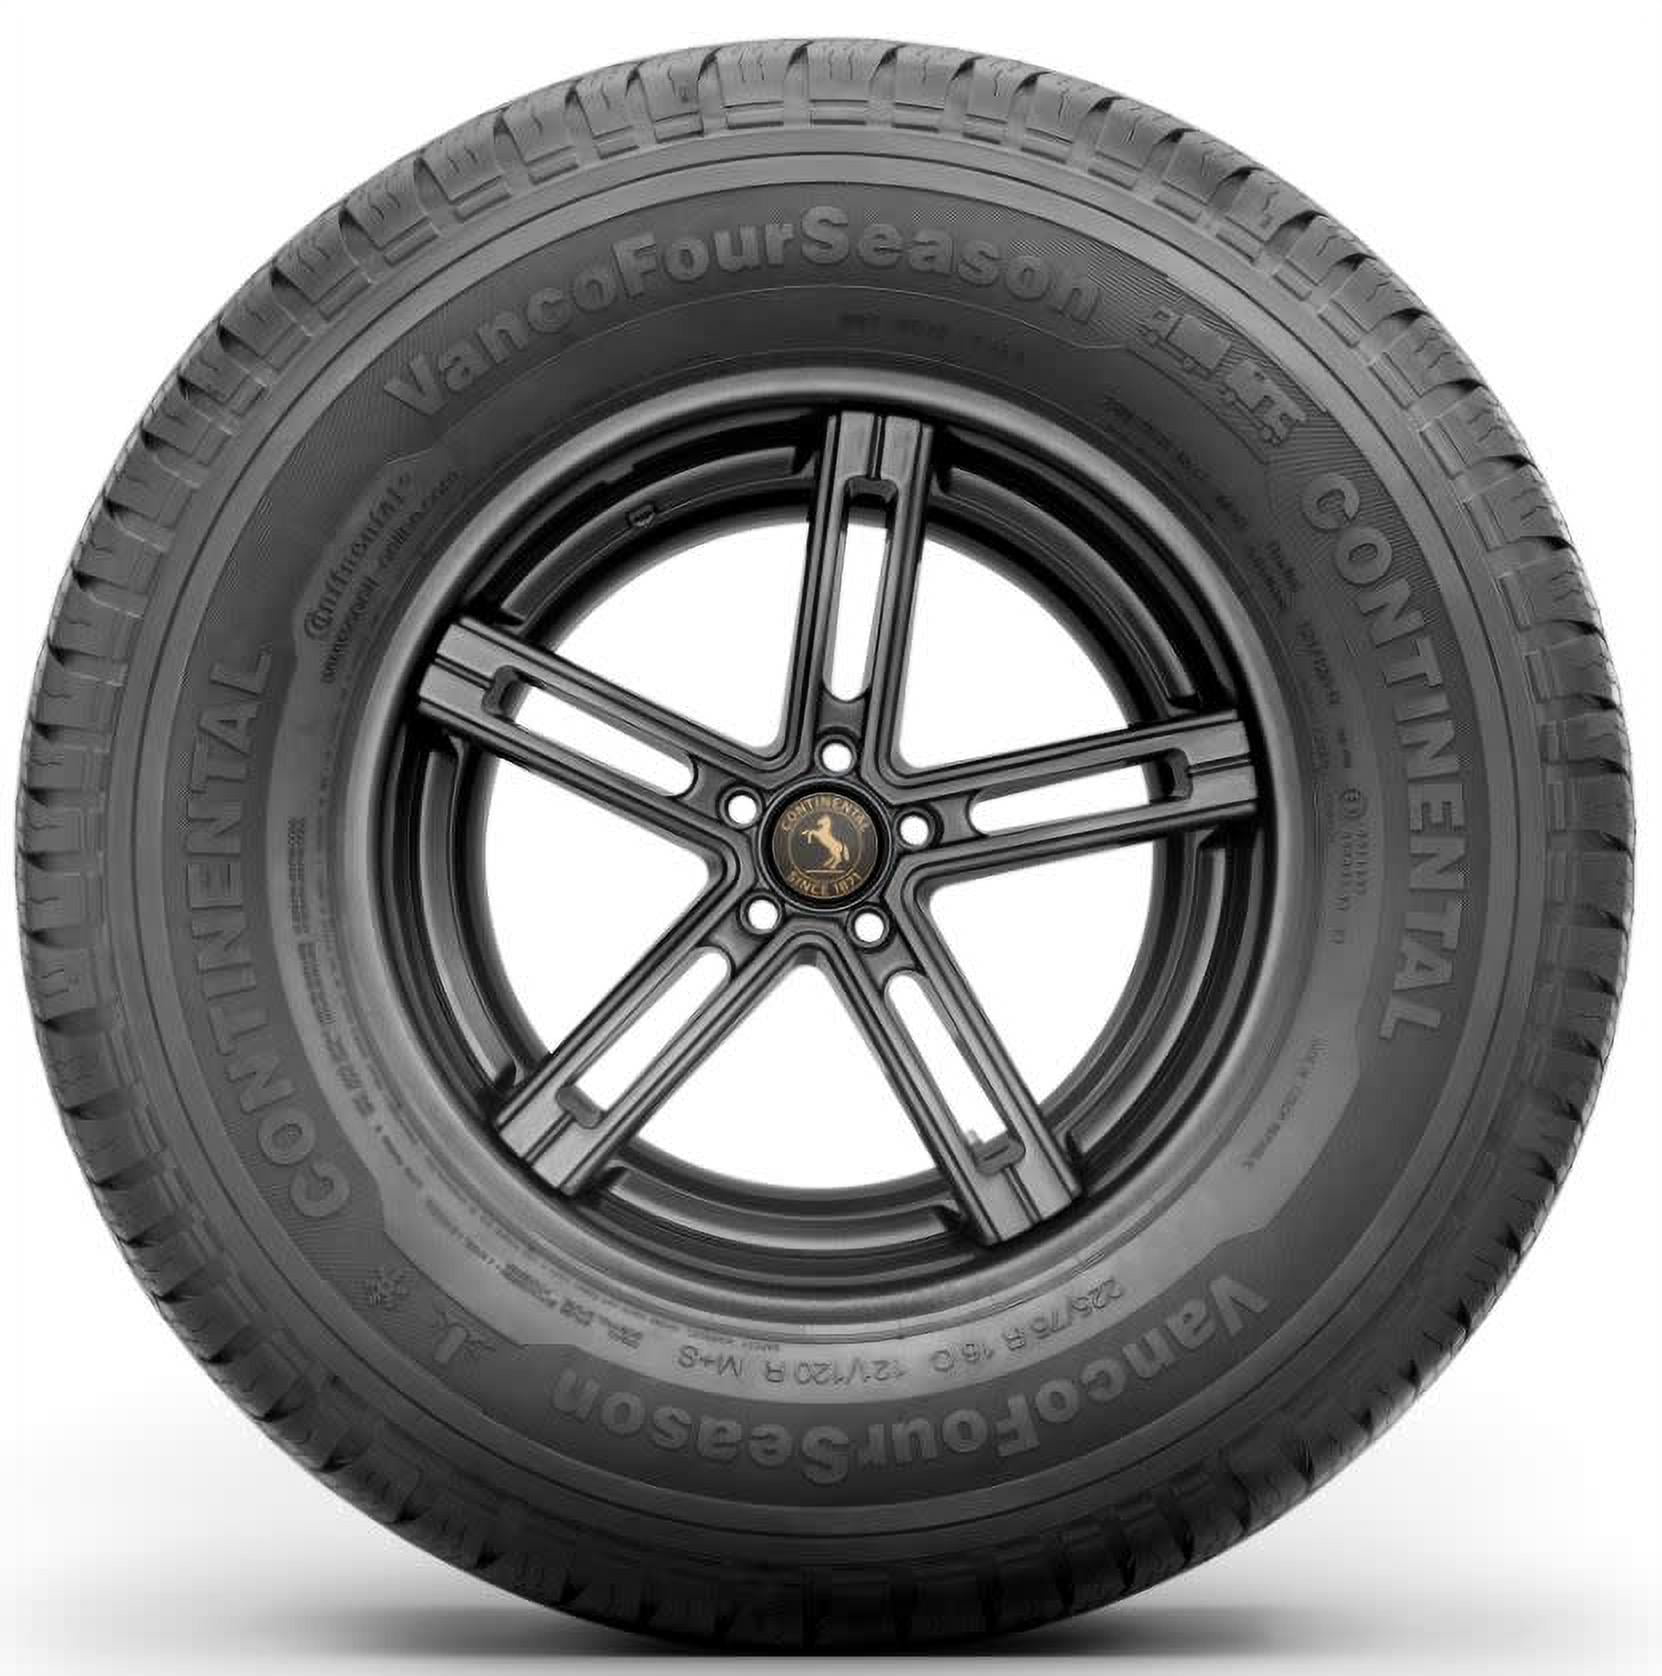 Continental VancoFourSeason 2 M+S 235/65R16 115R All-Season Tire 